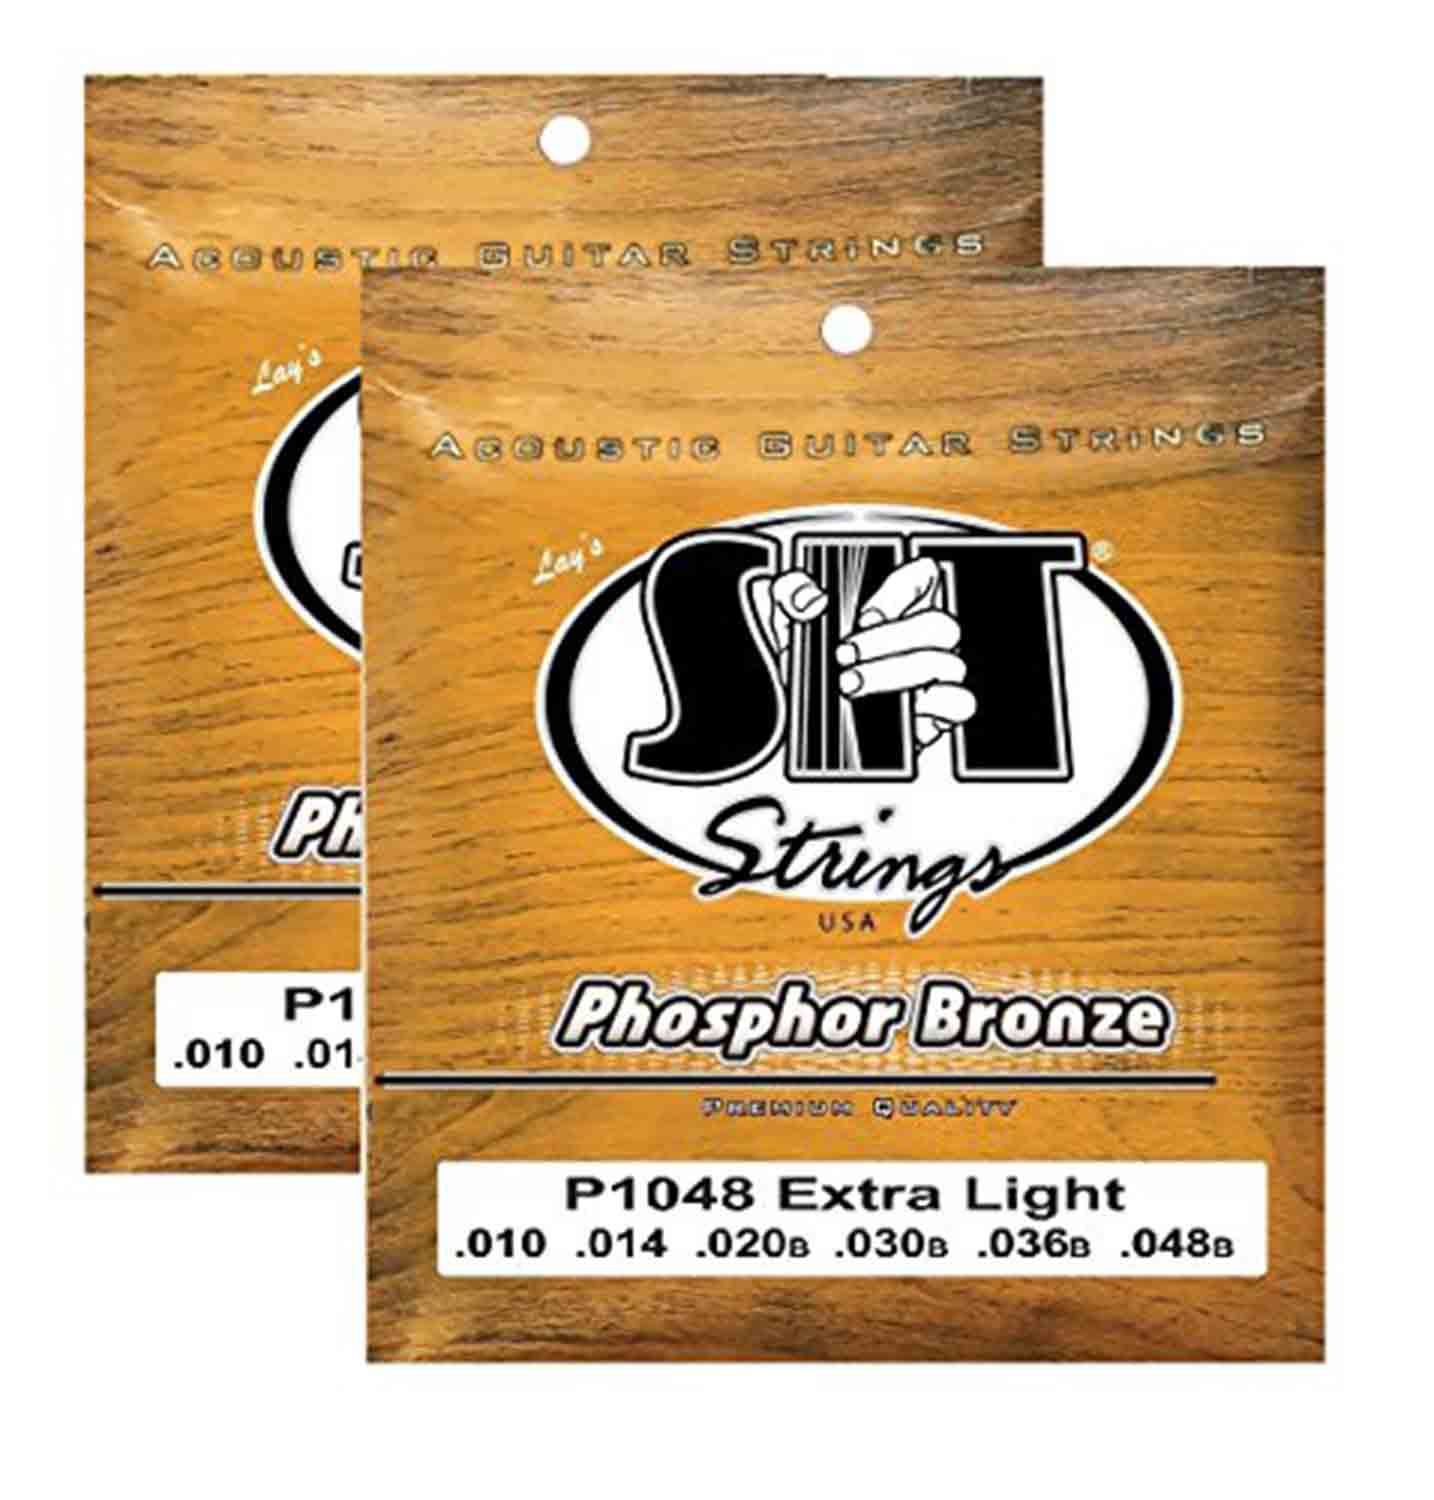 SIT Strings P1048 Extra Light Phosphor Bronze Acoustic Guitar Strings - 2 Pack - Hollywood DJ